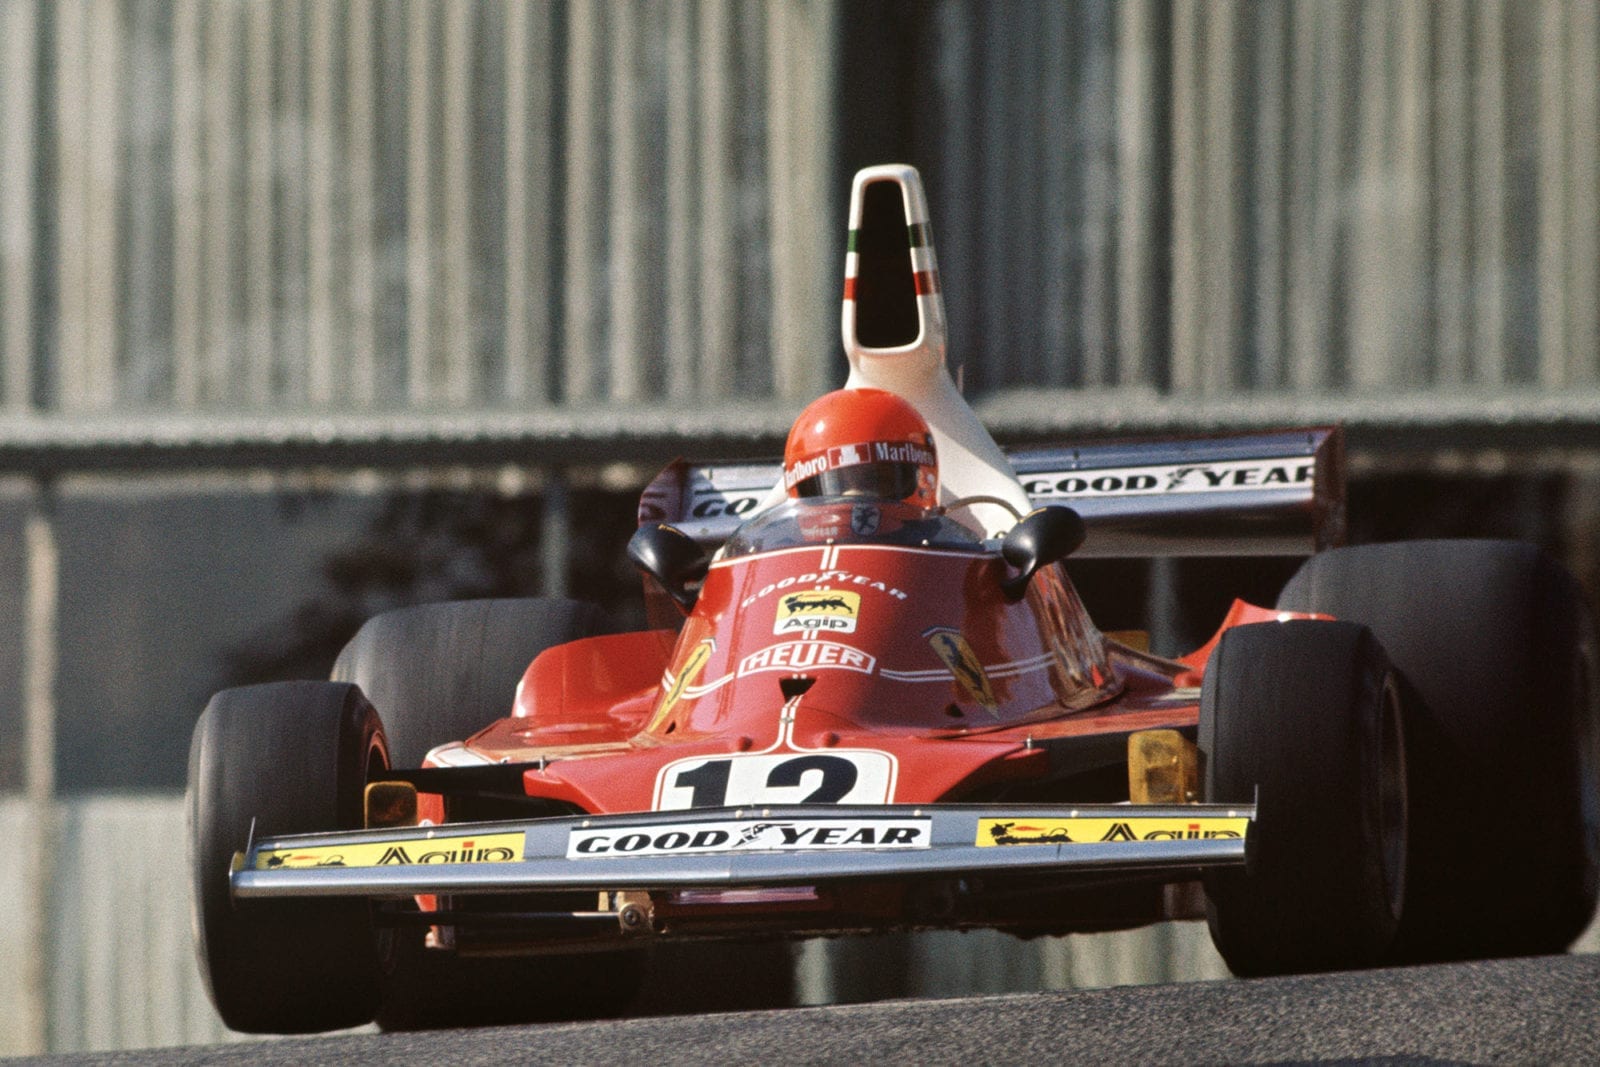 Niki Lauda's Ferrari jumps through Casino at the 1975 Monaco Grand Prix